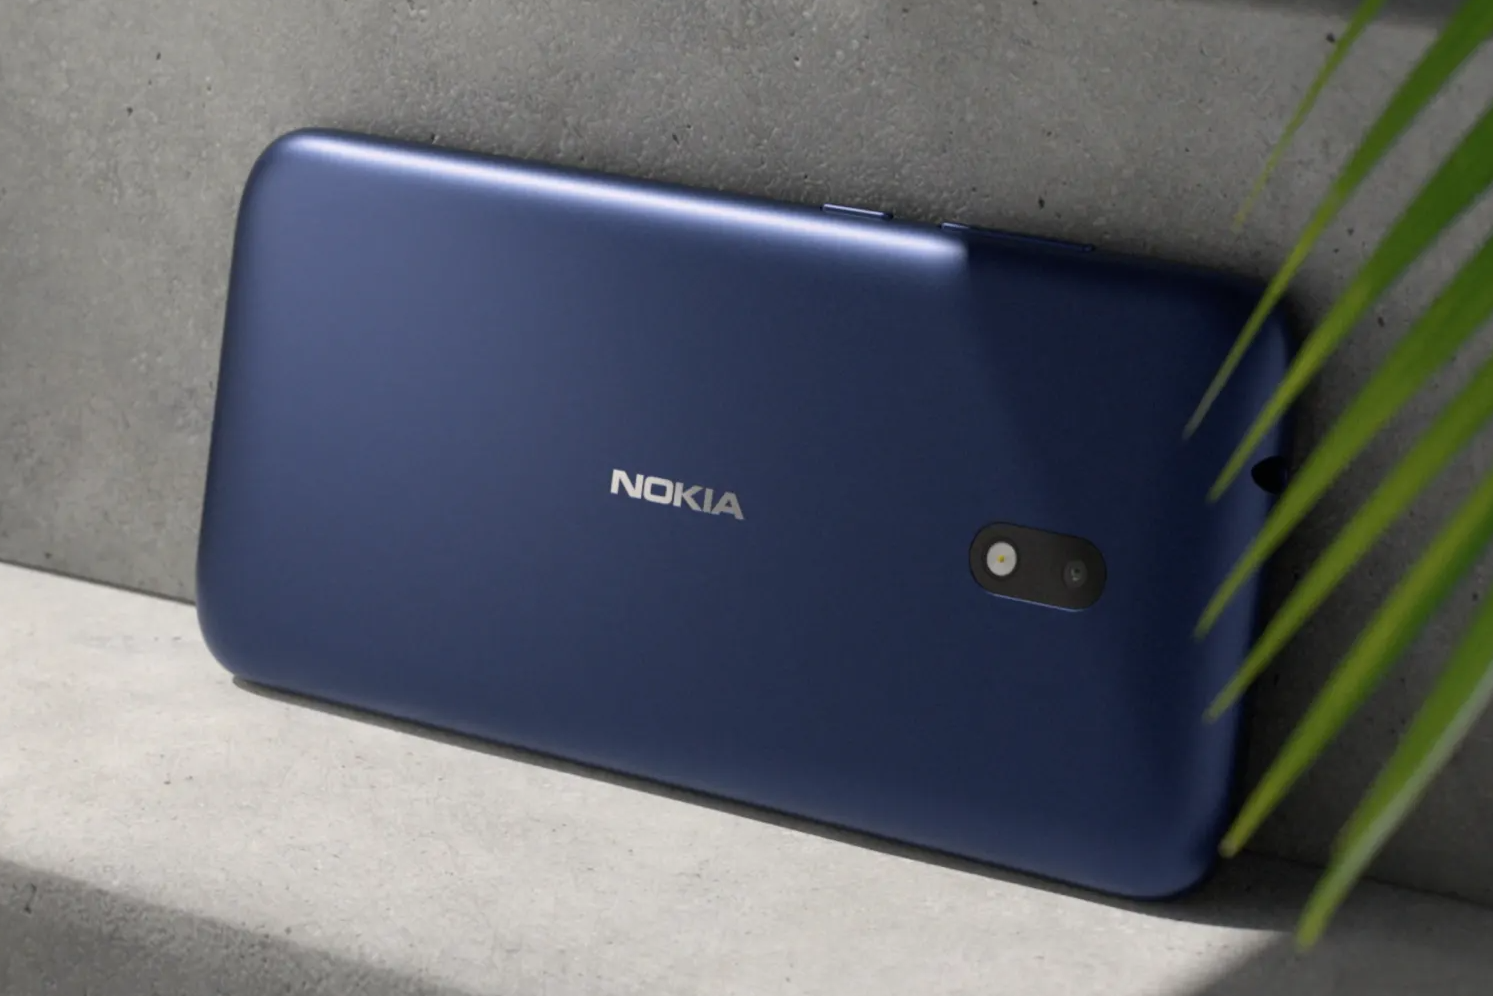 Inilunsad ang Nokia C1 Plus